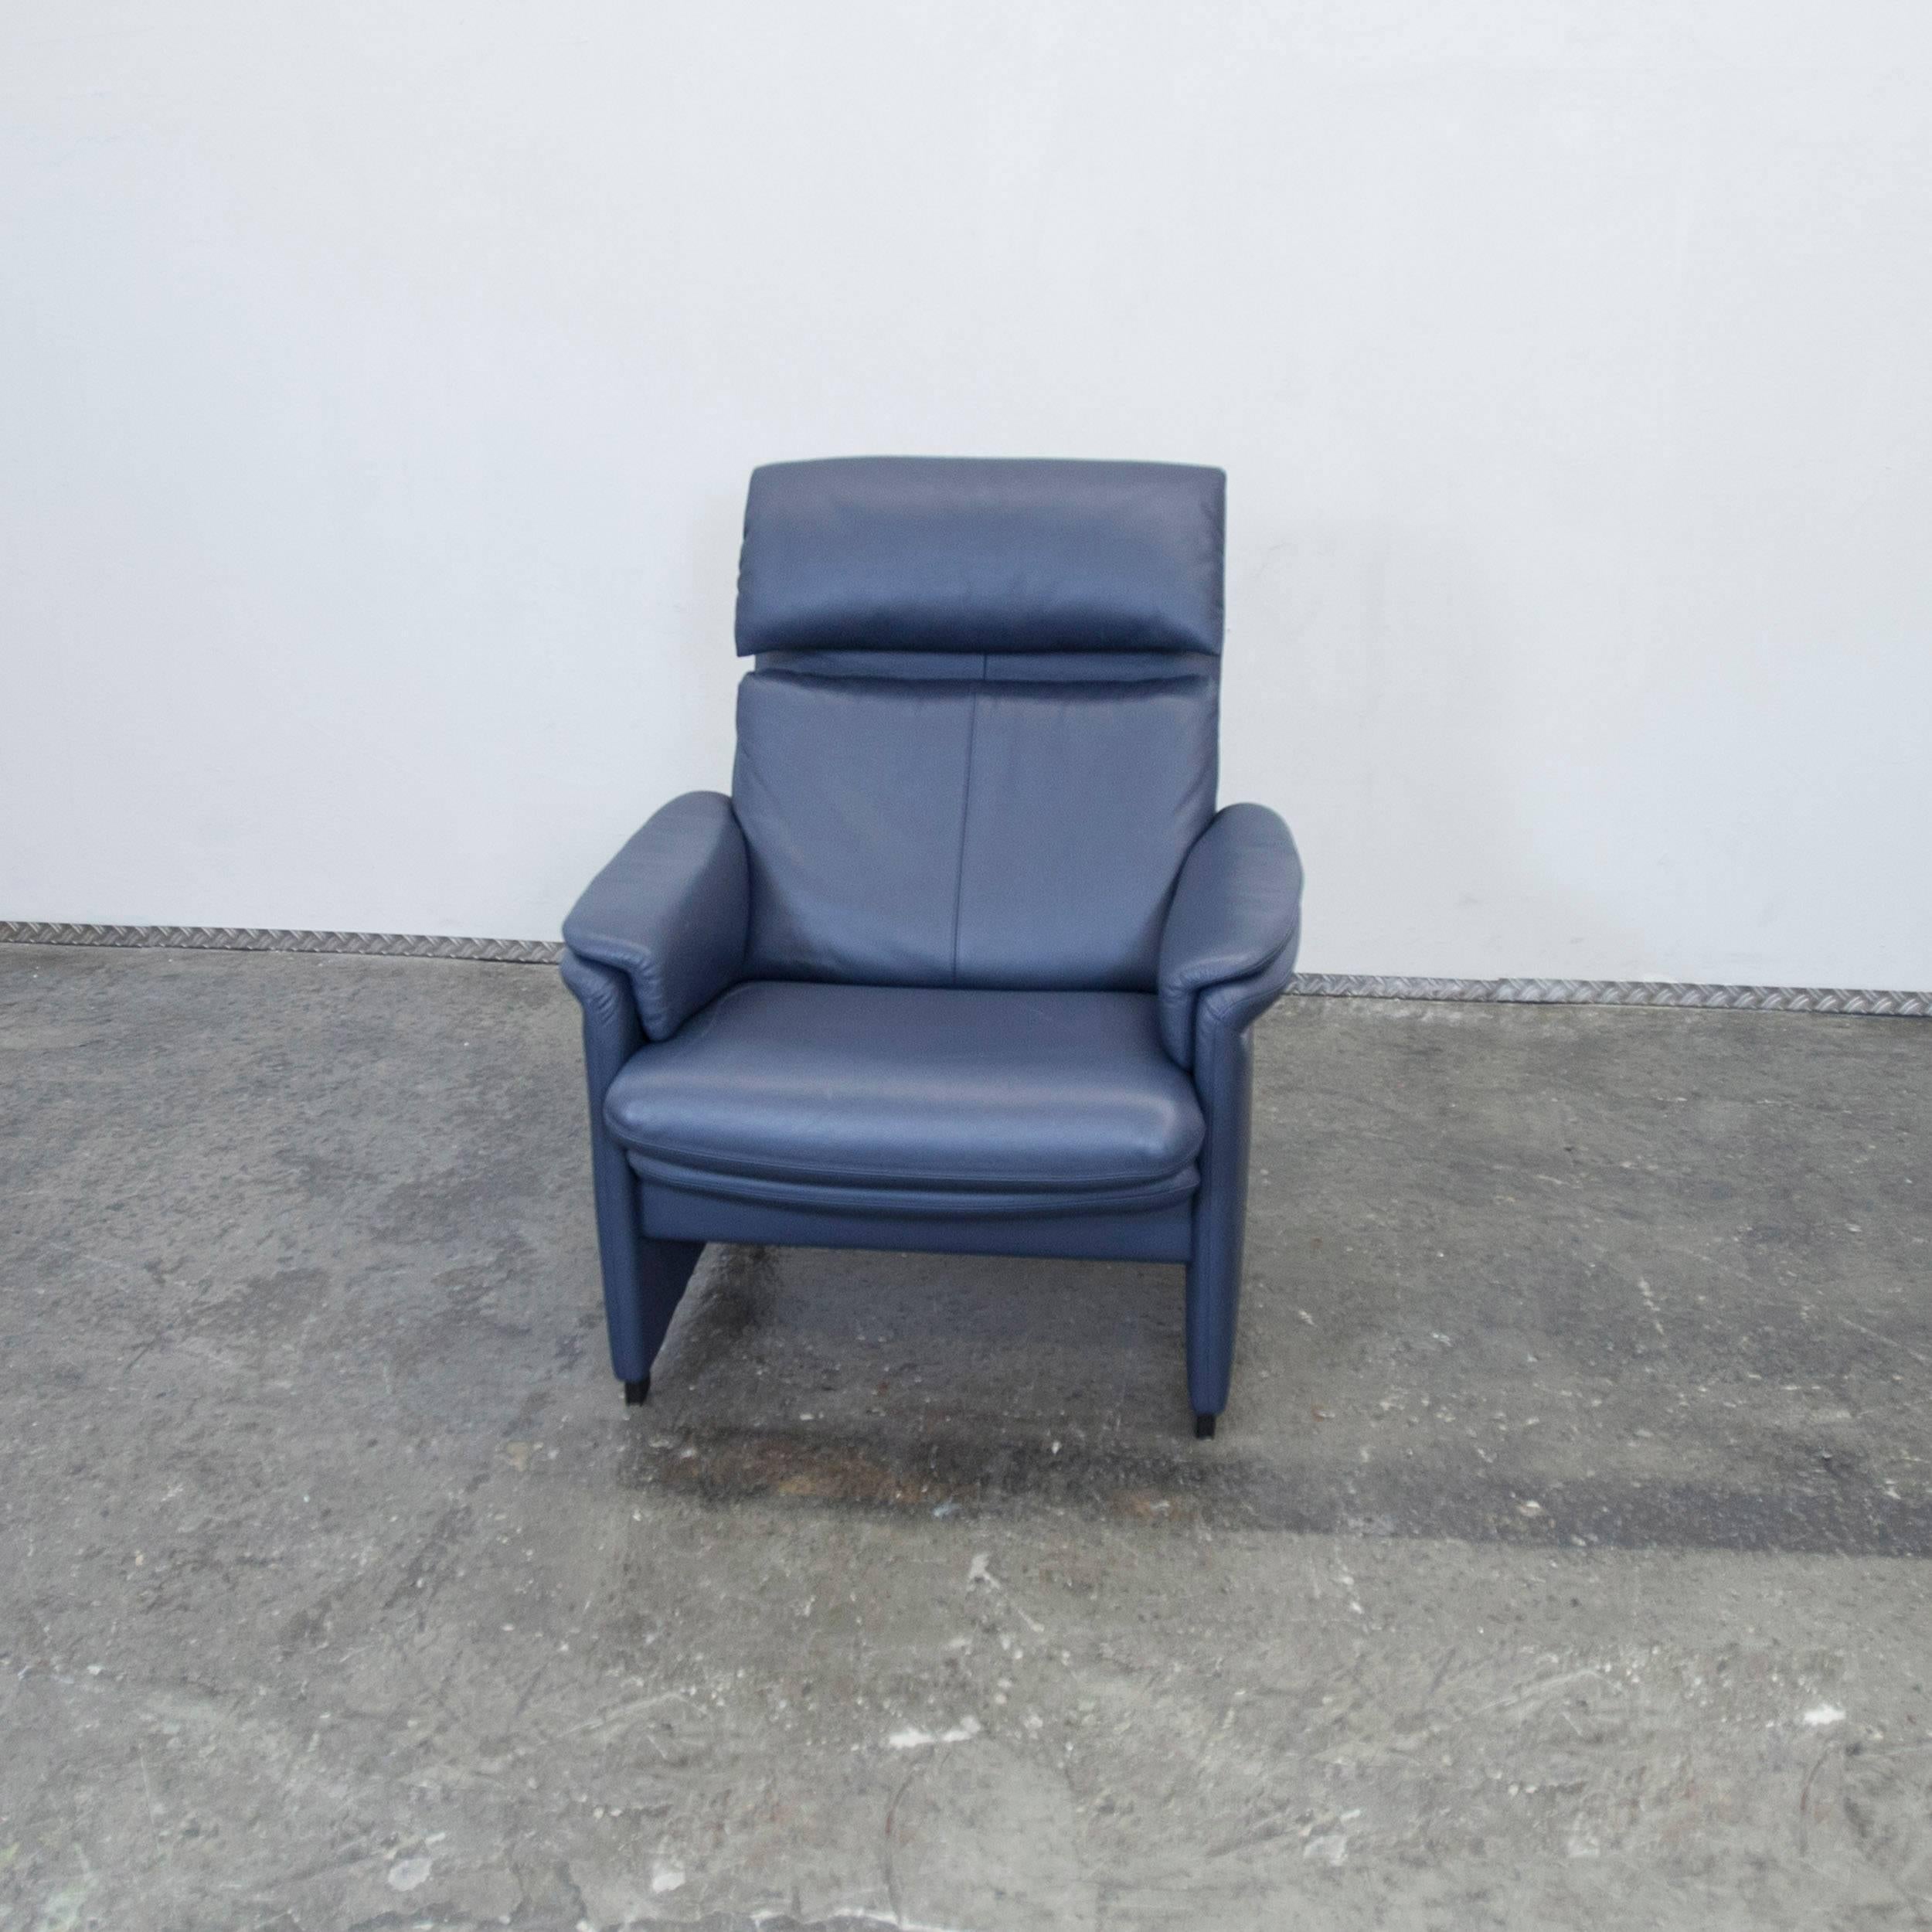 designer leather chair